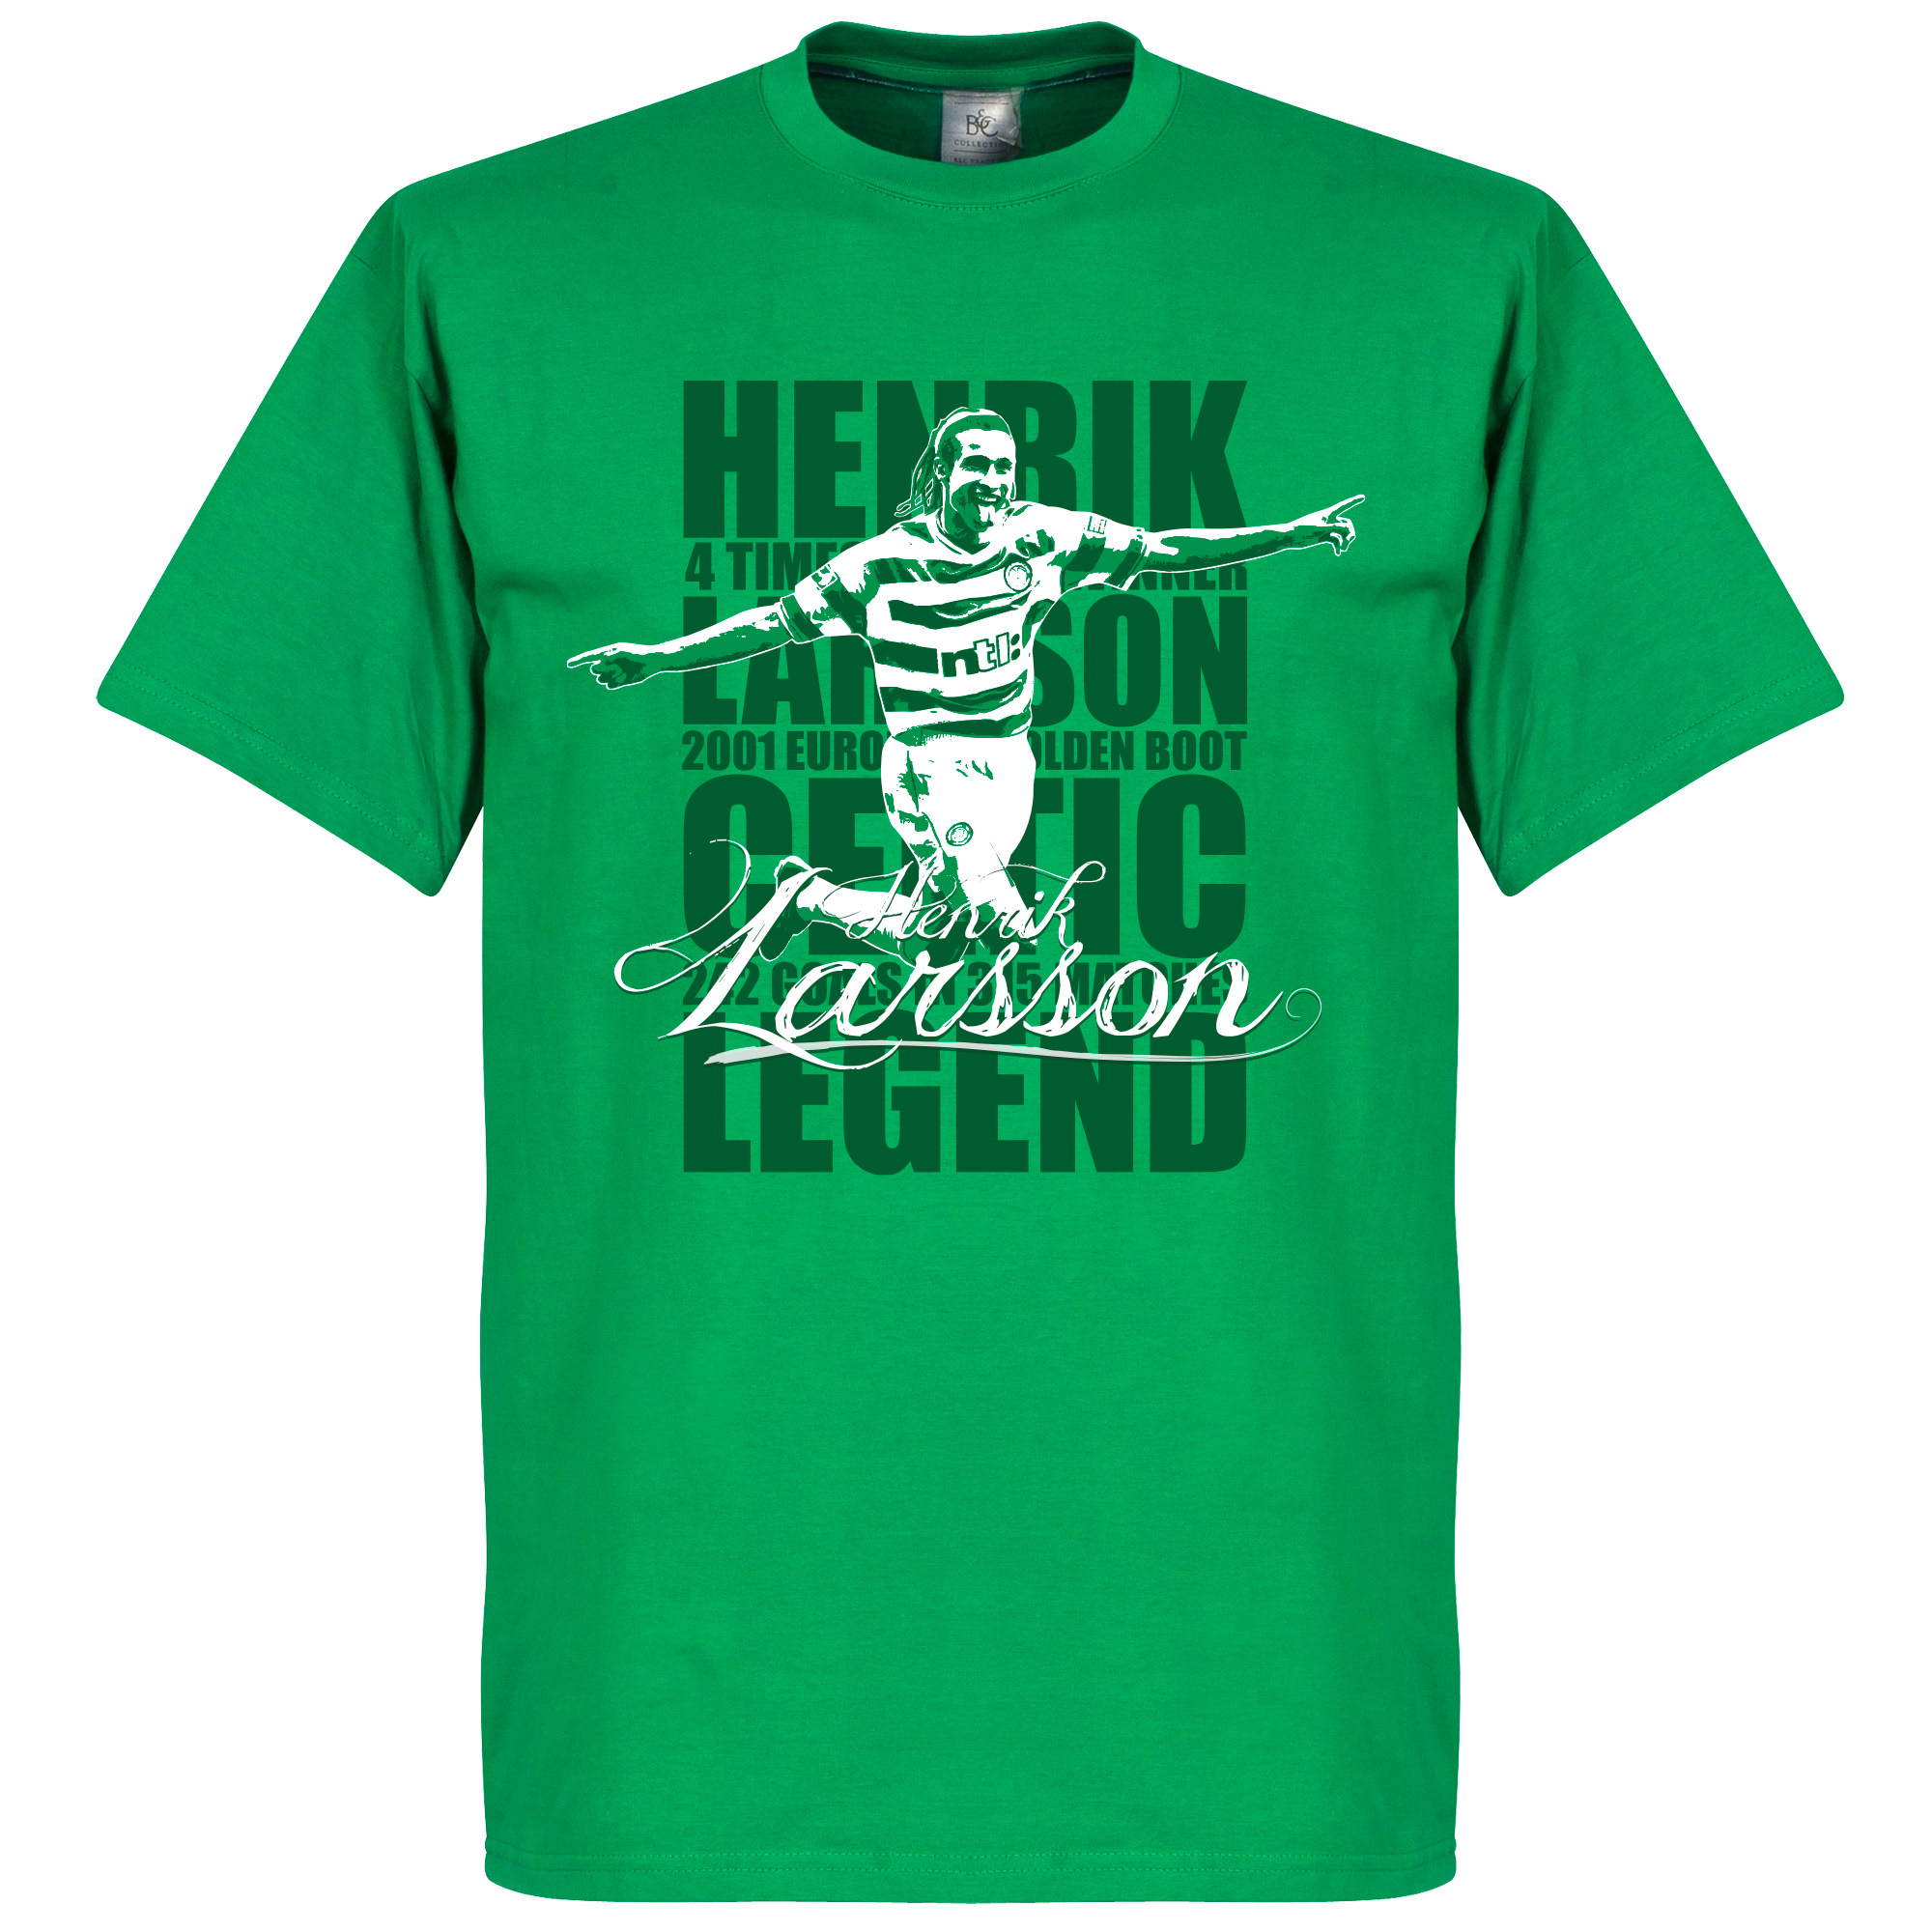 Henrik Larsson Celtic Legend T-Shirt - Groen Top Merken Winkel